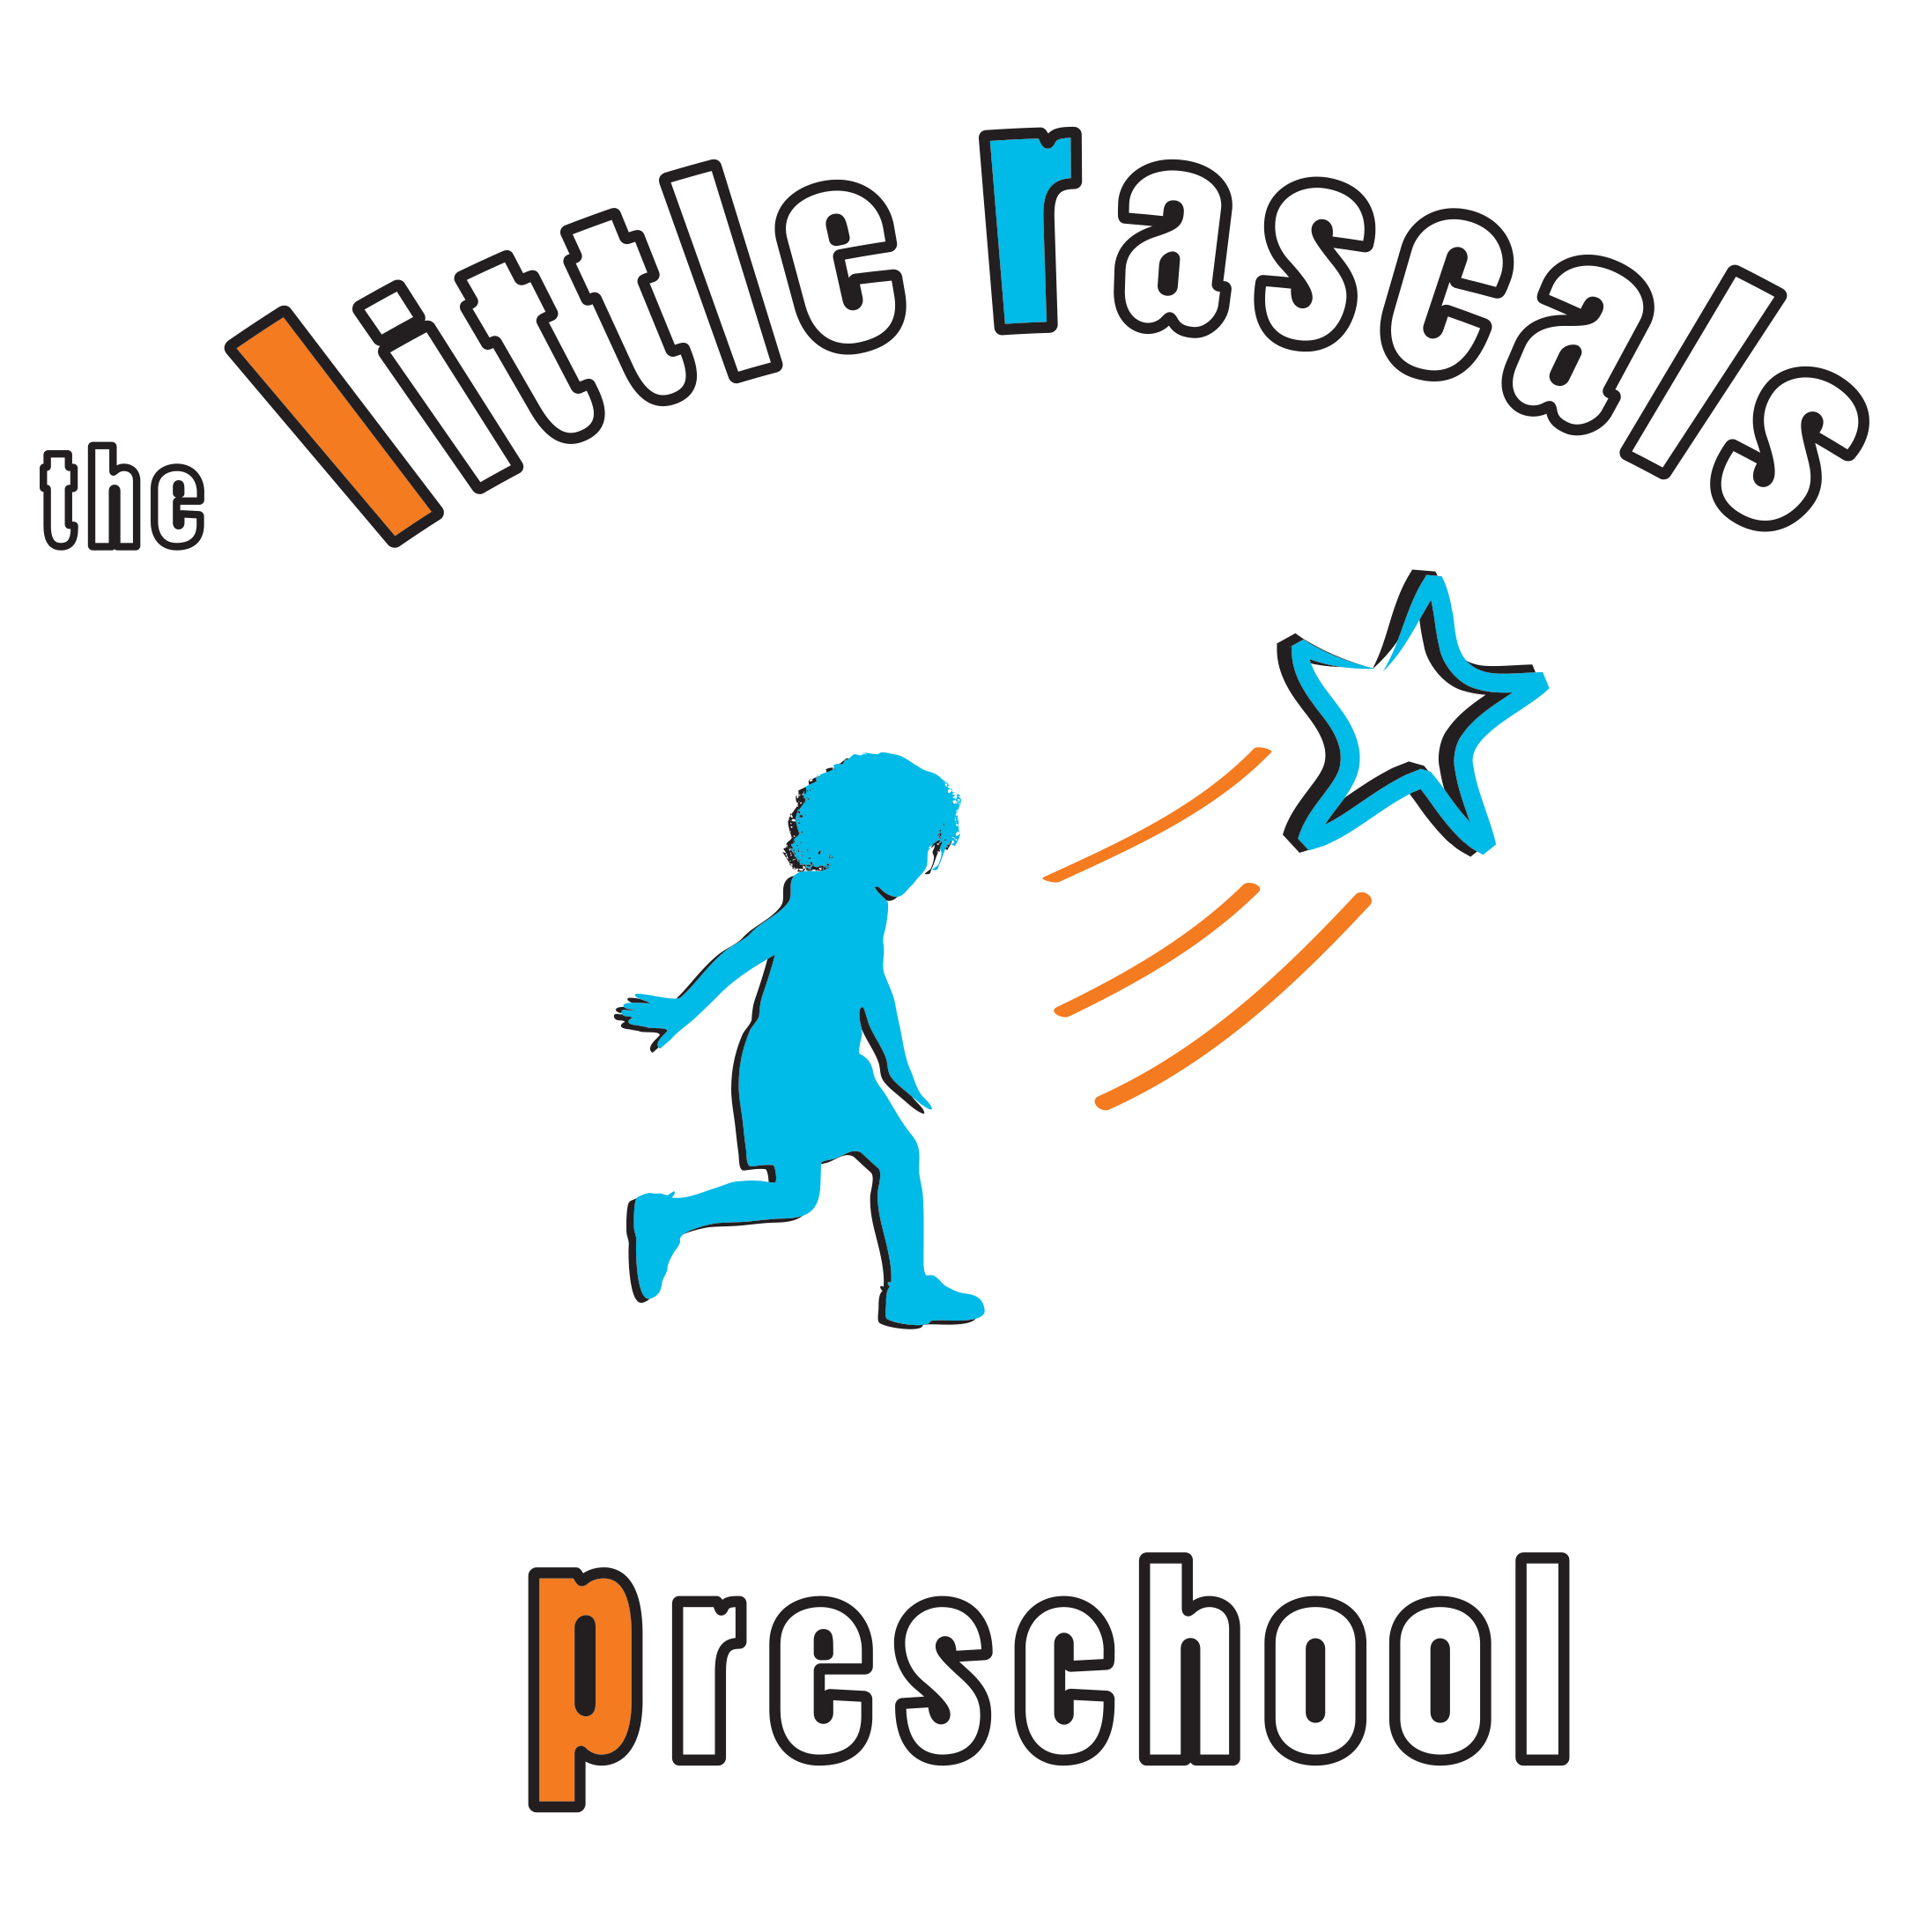 The Little Rascals Preshcool